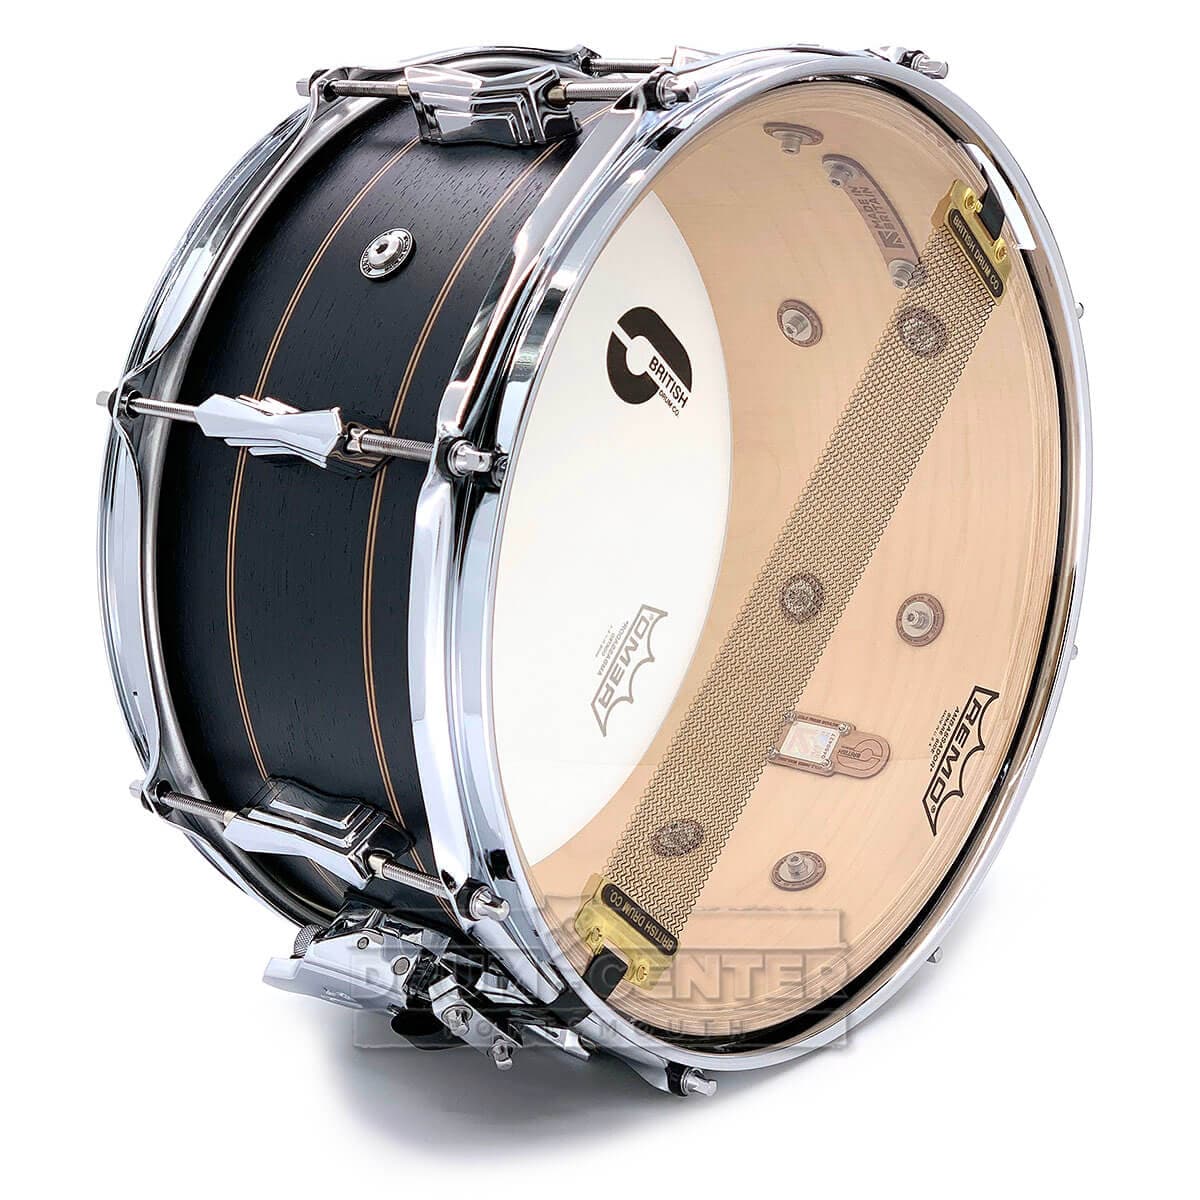 British Drum Company Merlin Snare Drum 13x6.5